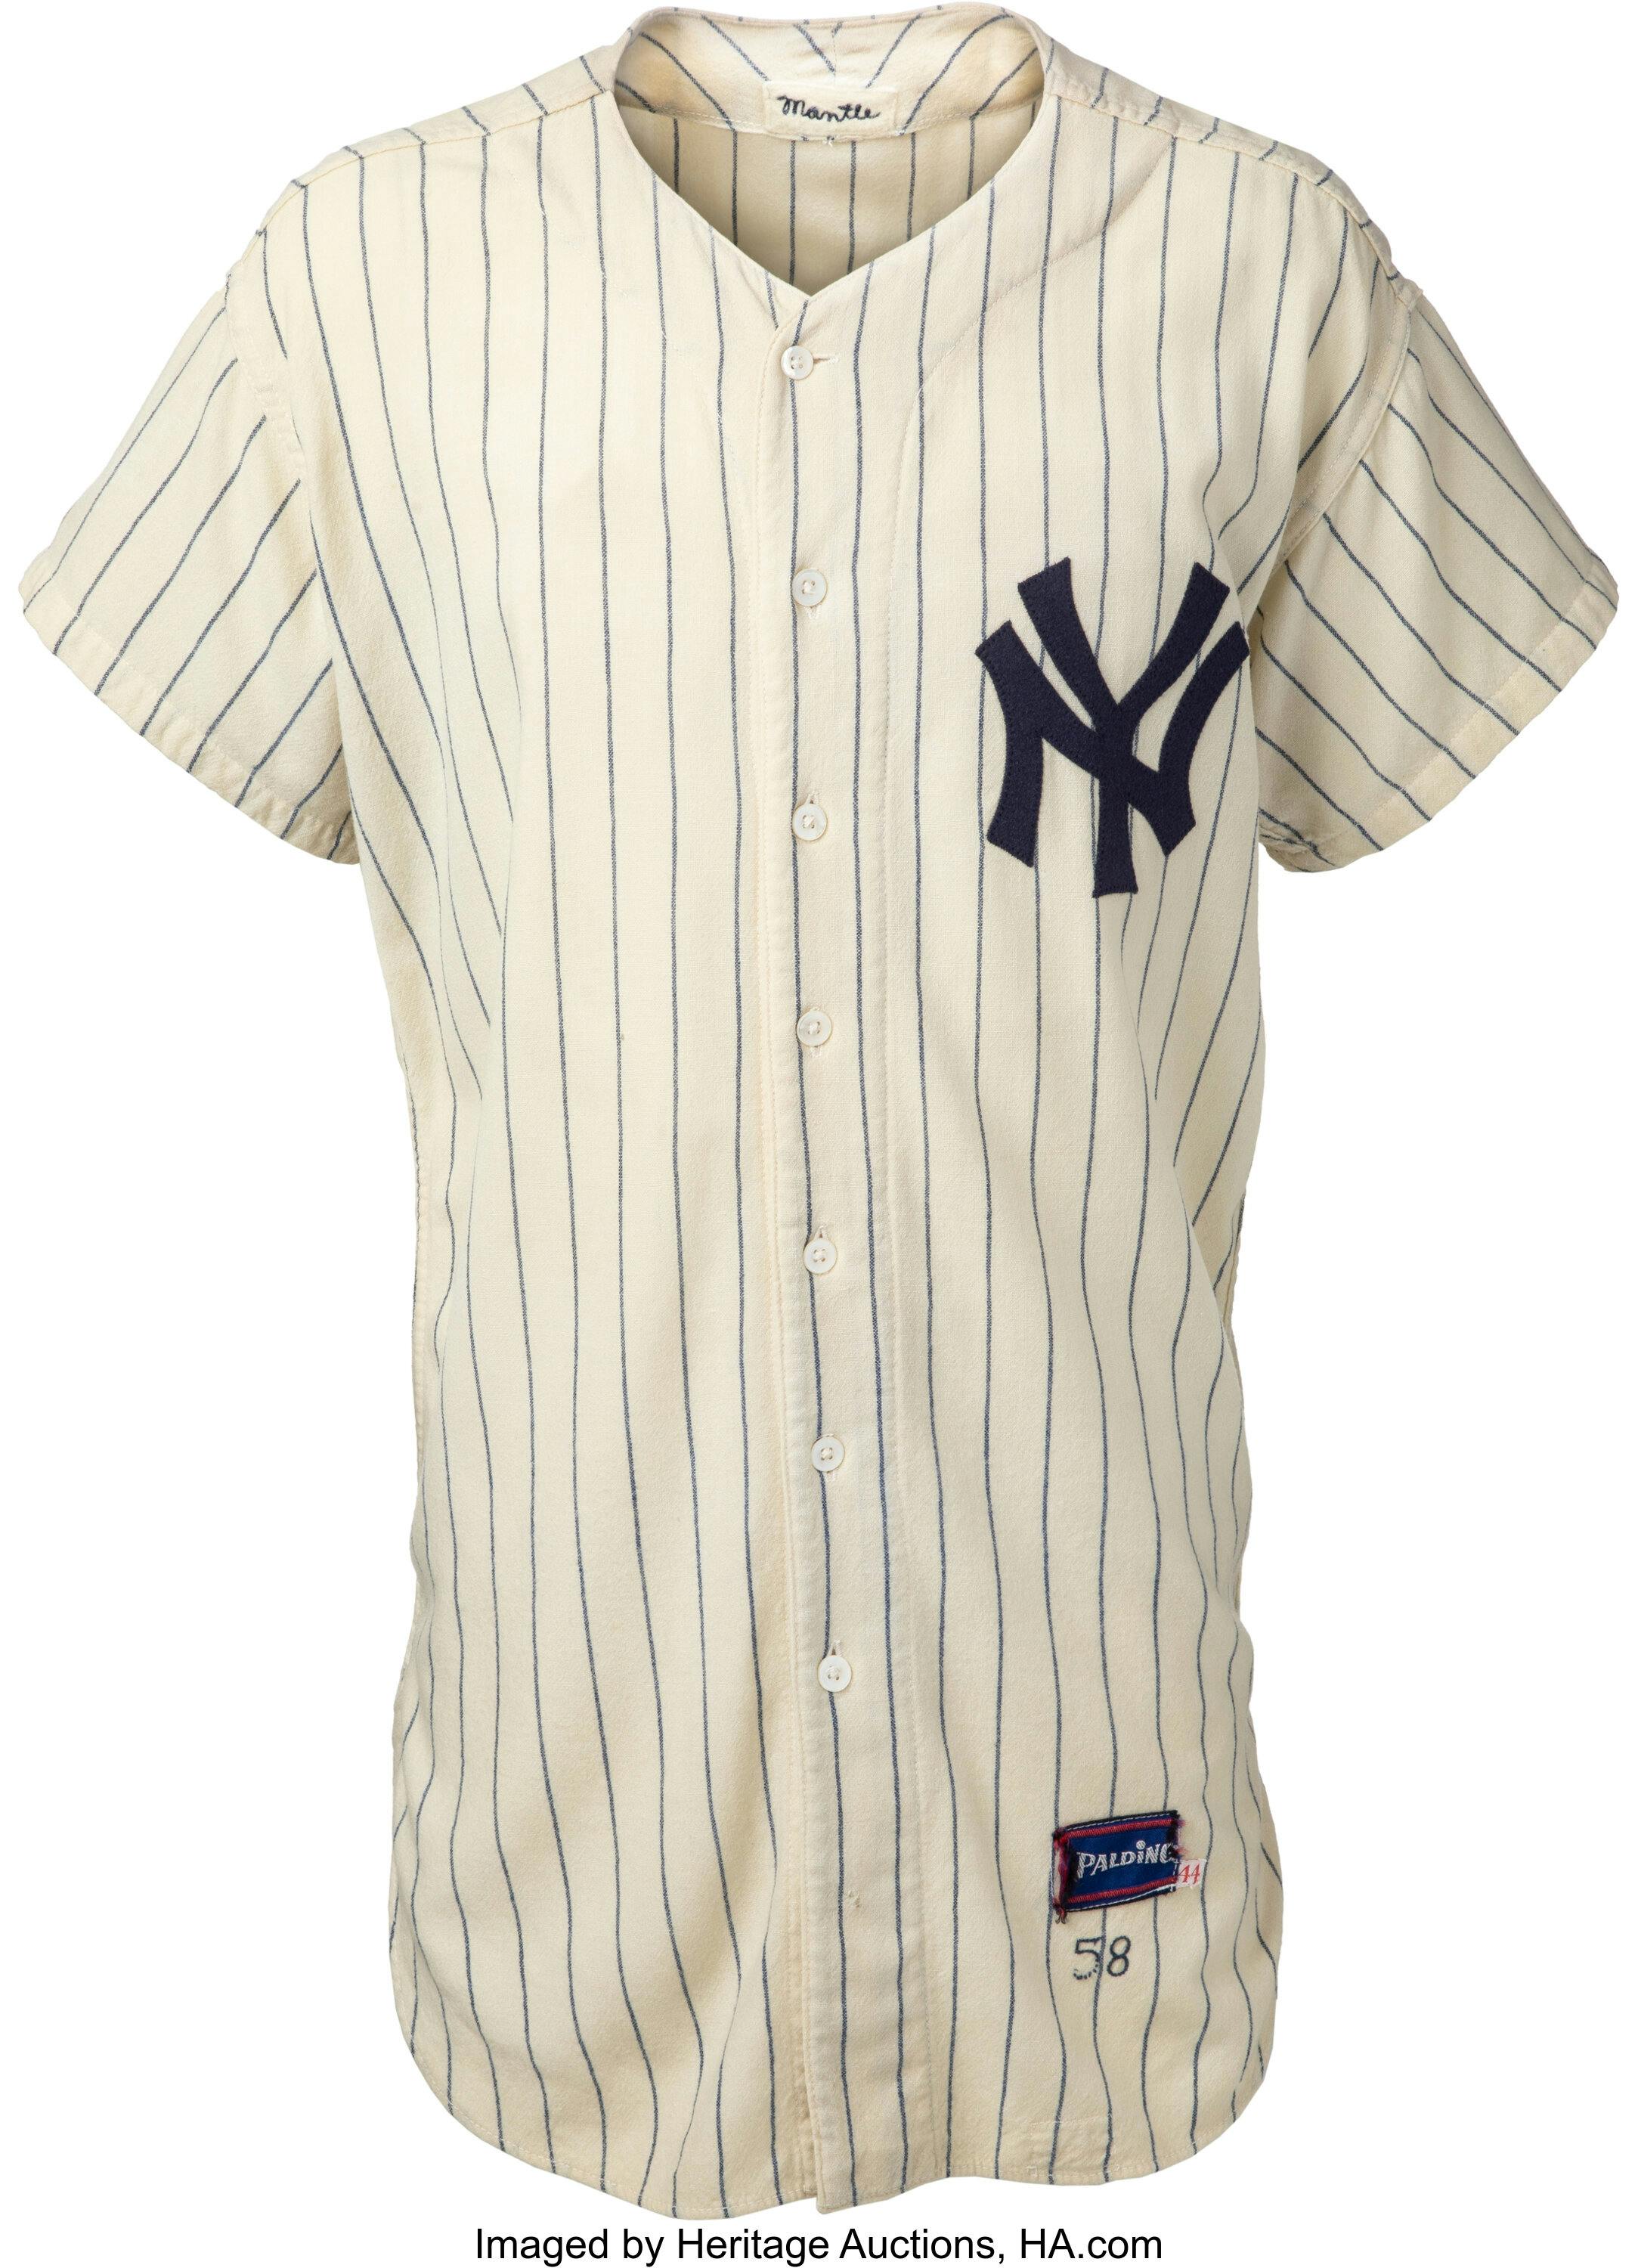 1966 Mickey Mantle Game Worn New York Yankees Jersey. Baseball